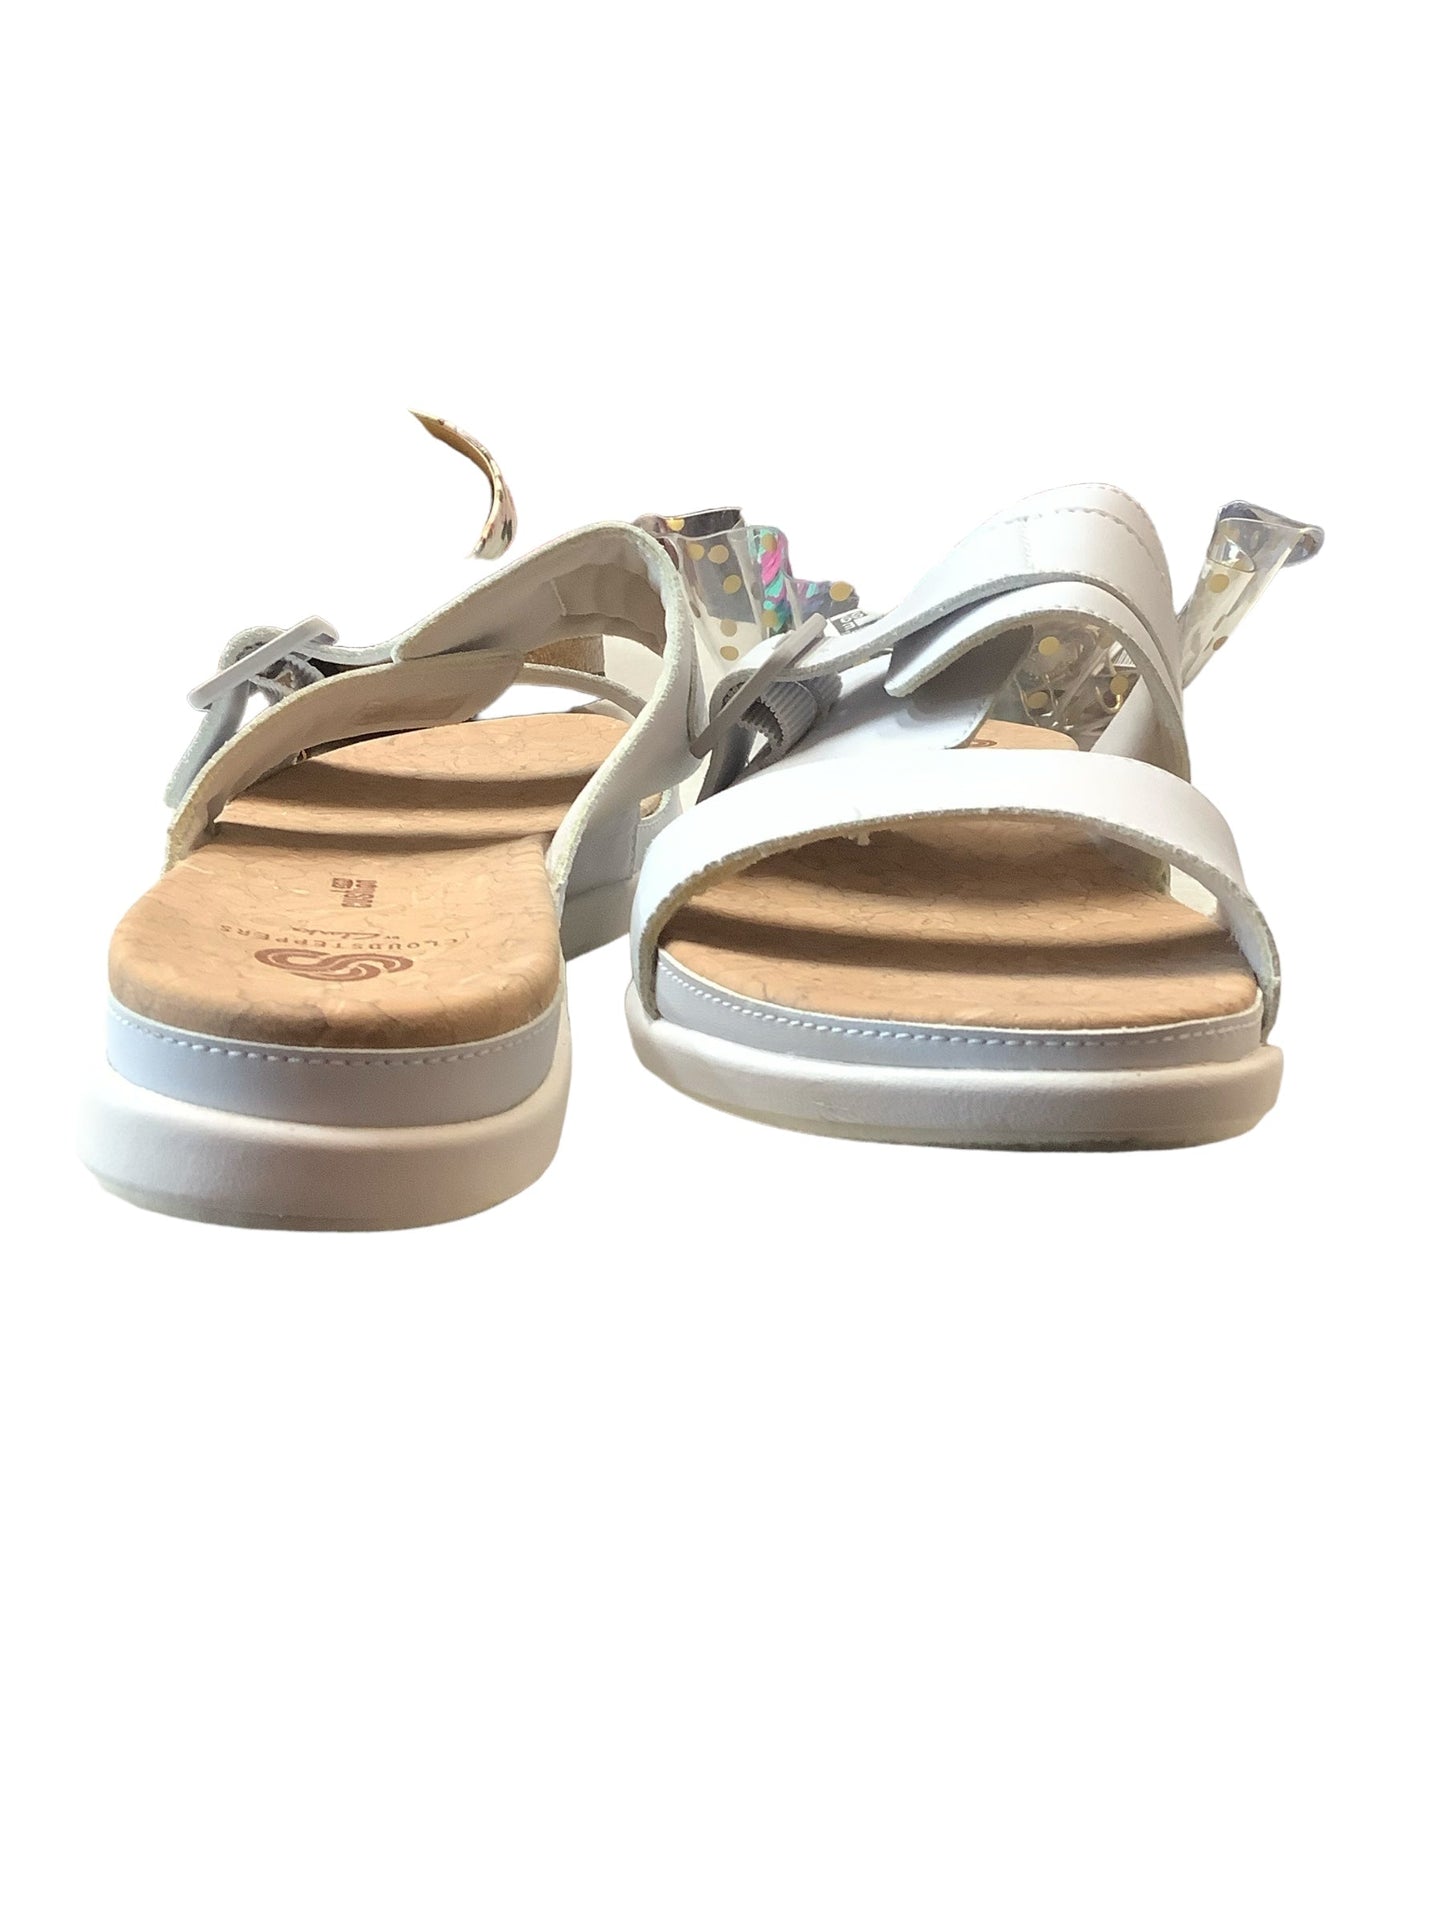 White Sandals Flip Flops Clarks, Size 9.5